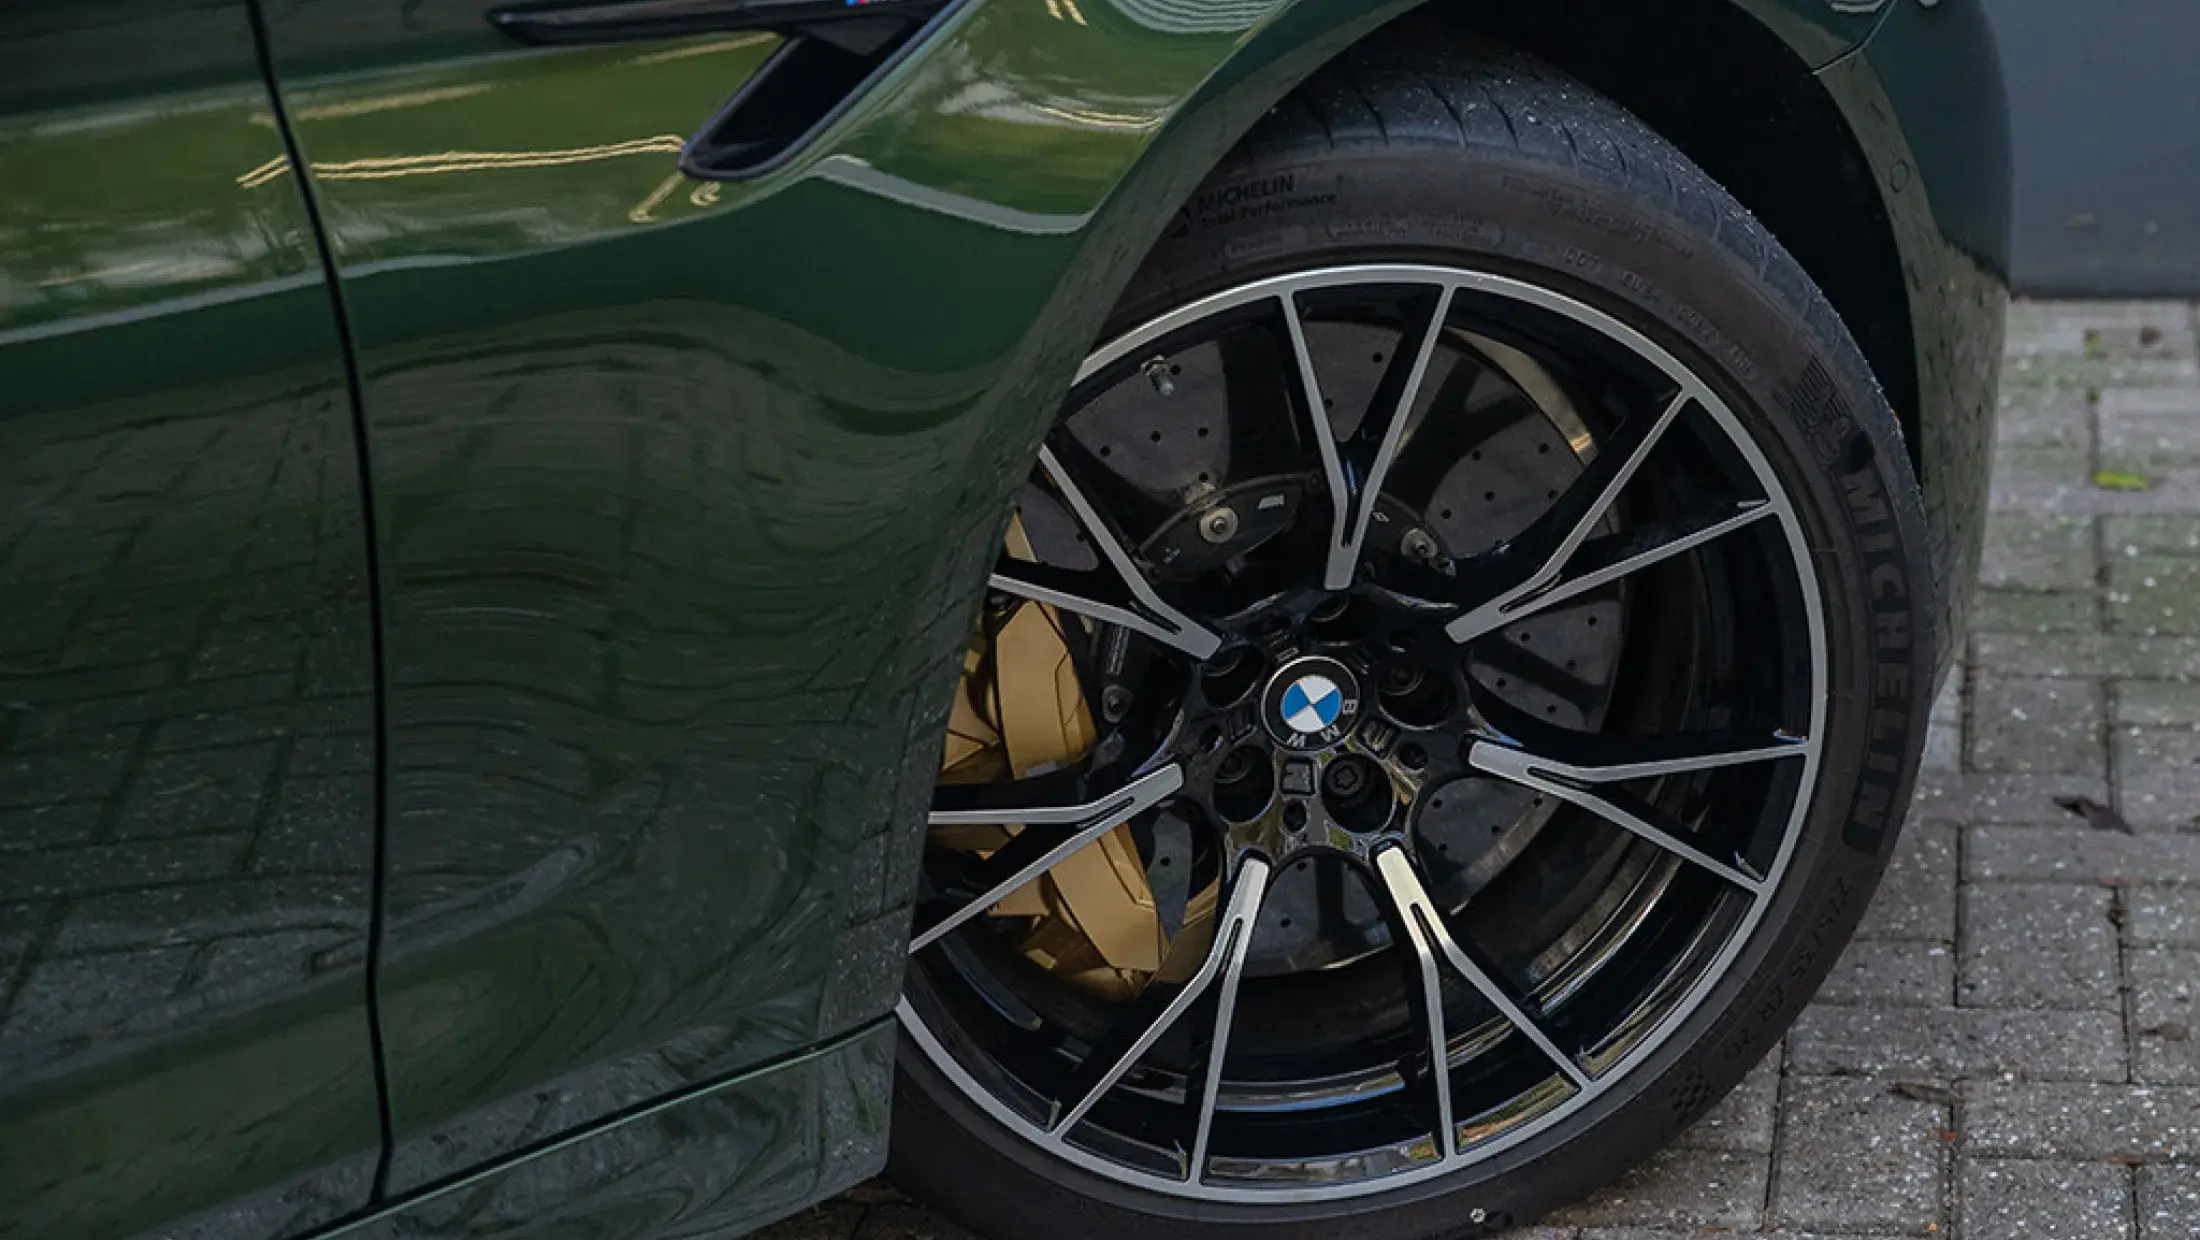 BMW M5 Competition Individual Verde Ermes G30 Volleder Merino Aragonbraun Carbon Brakes 2020